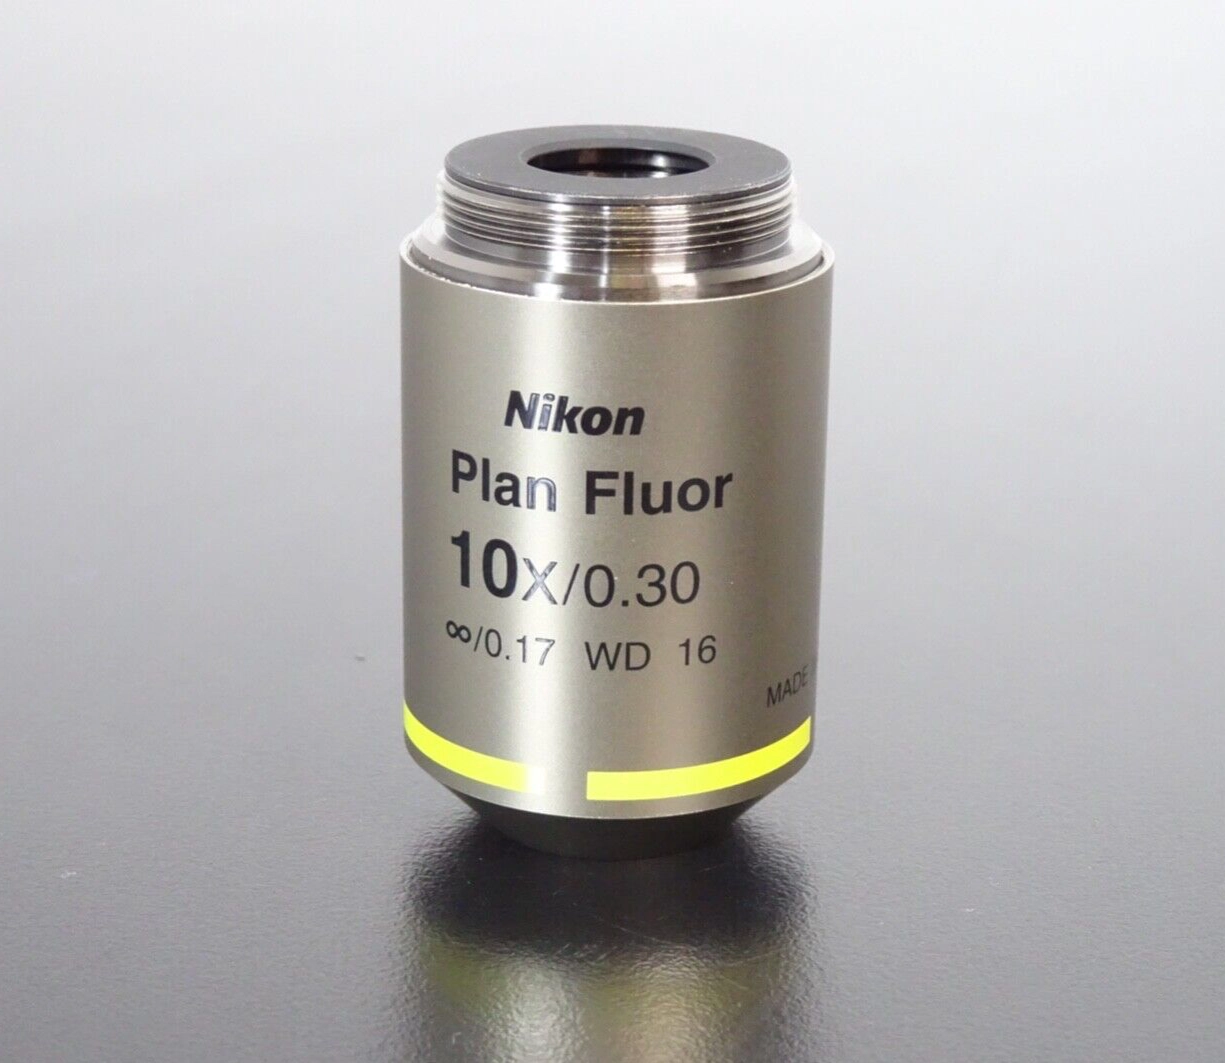 Nikon Fluor | 10x/0.30 Microscope Objective